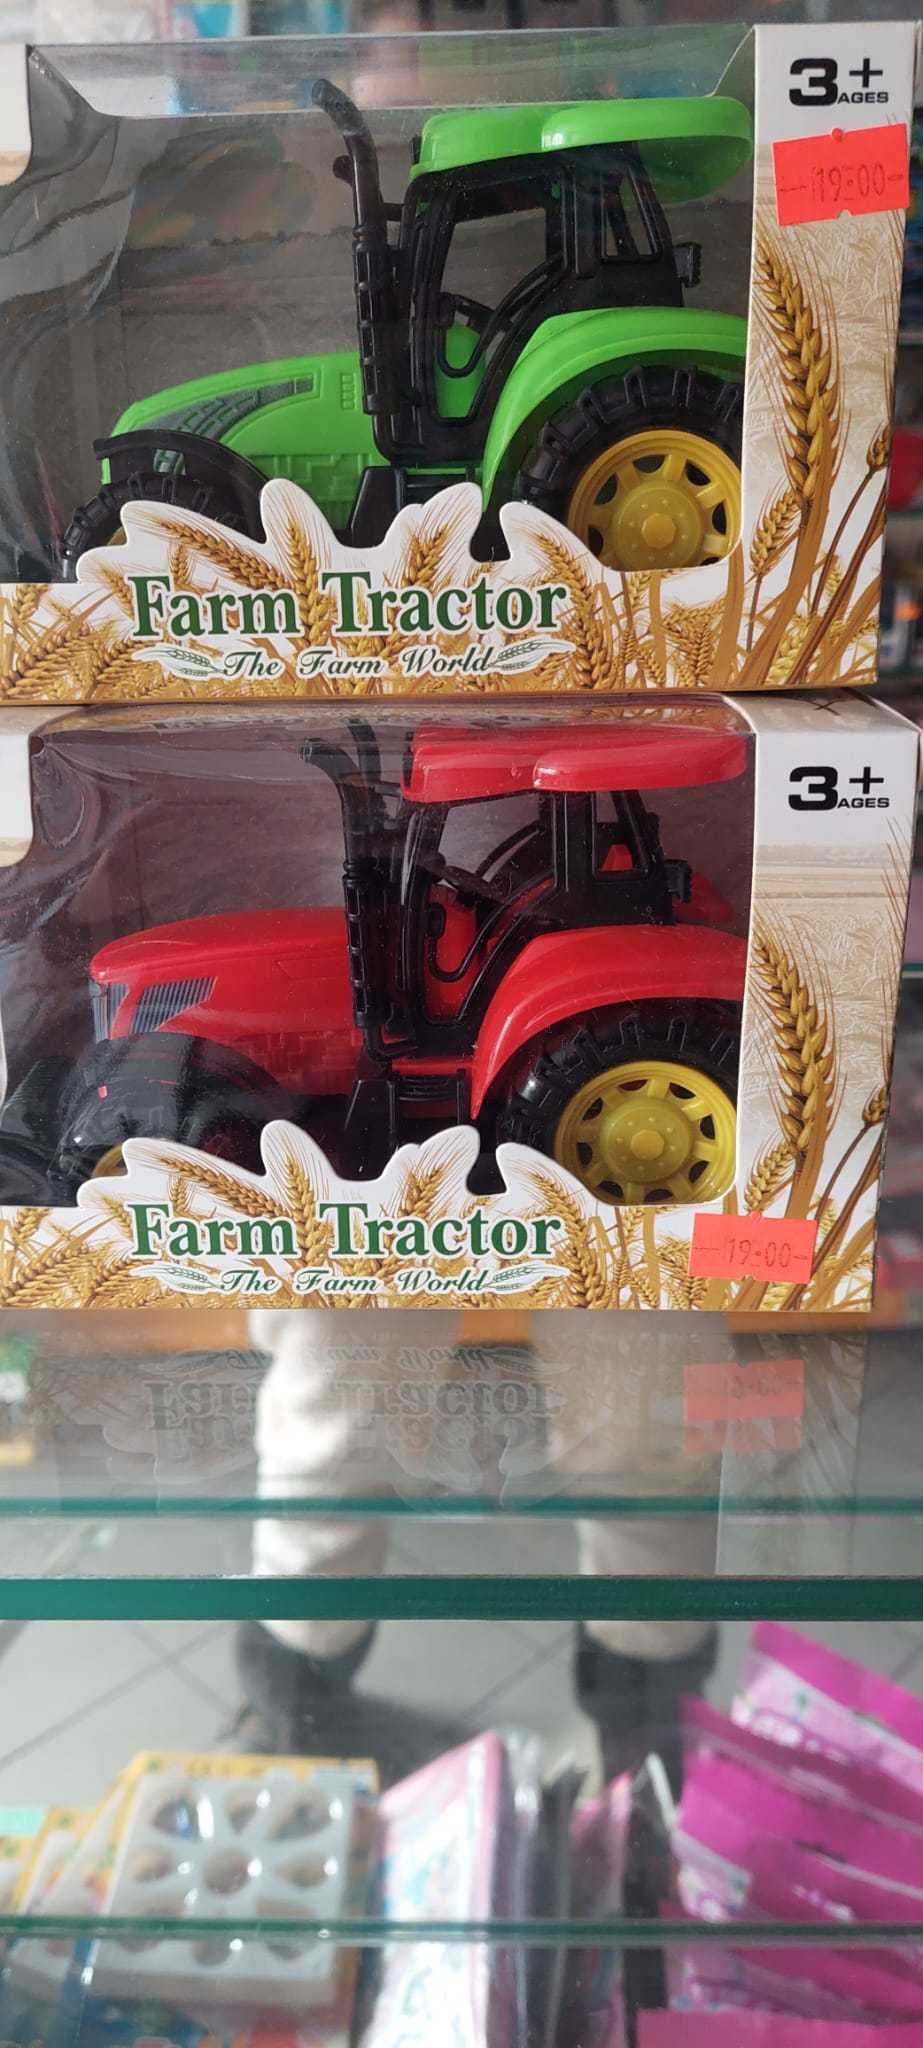 Auto samochód pojazd traktor z napędem Farma U TIGERA SKLEP